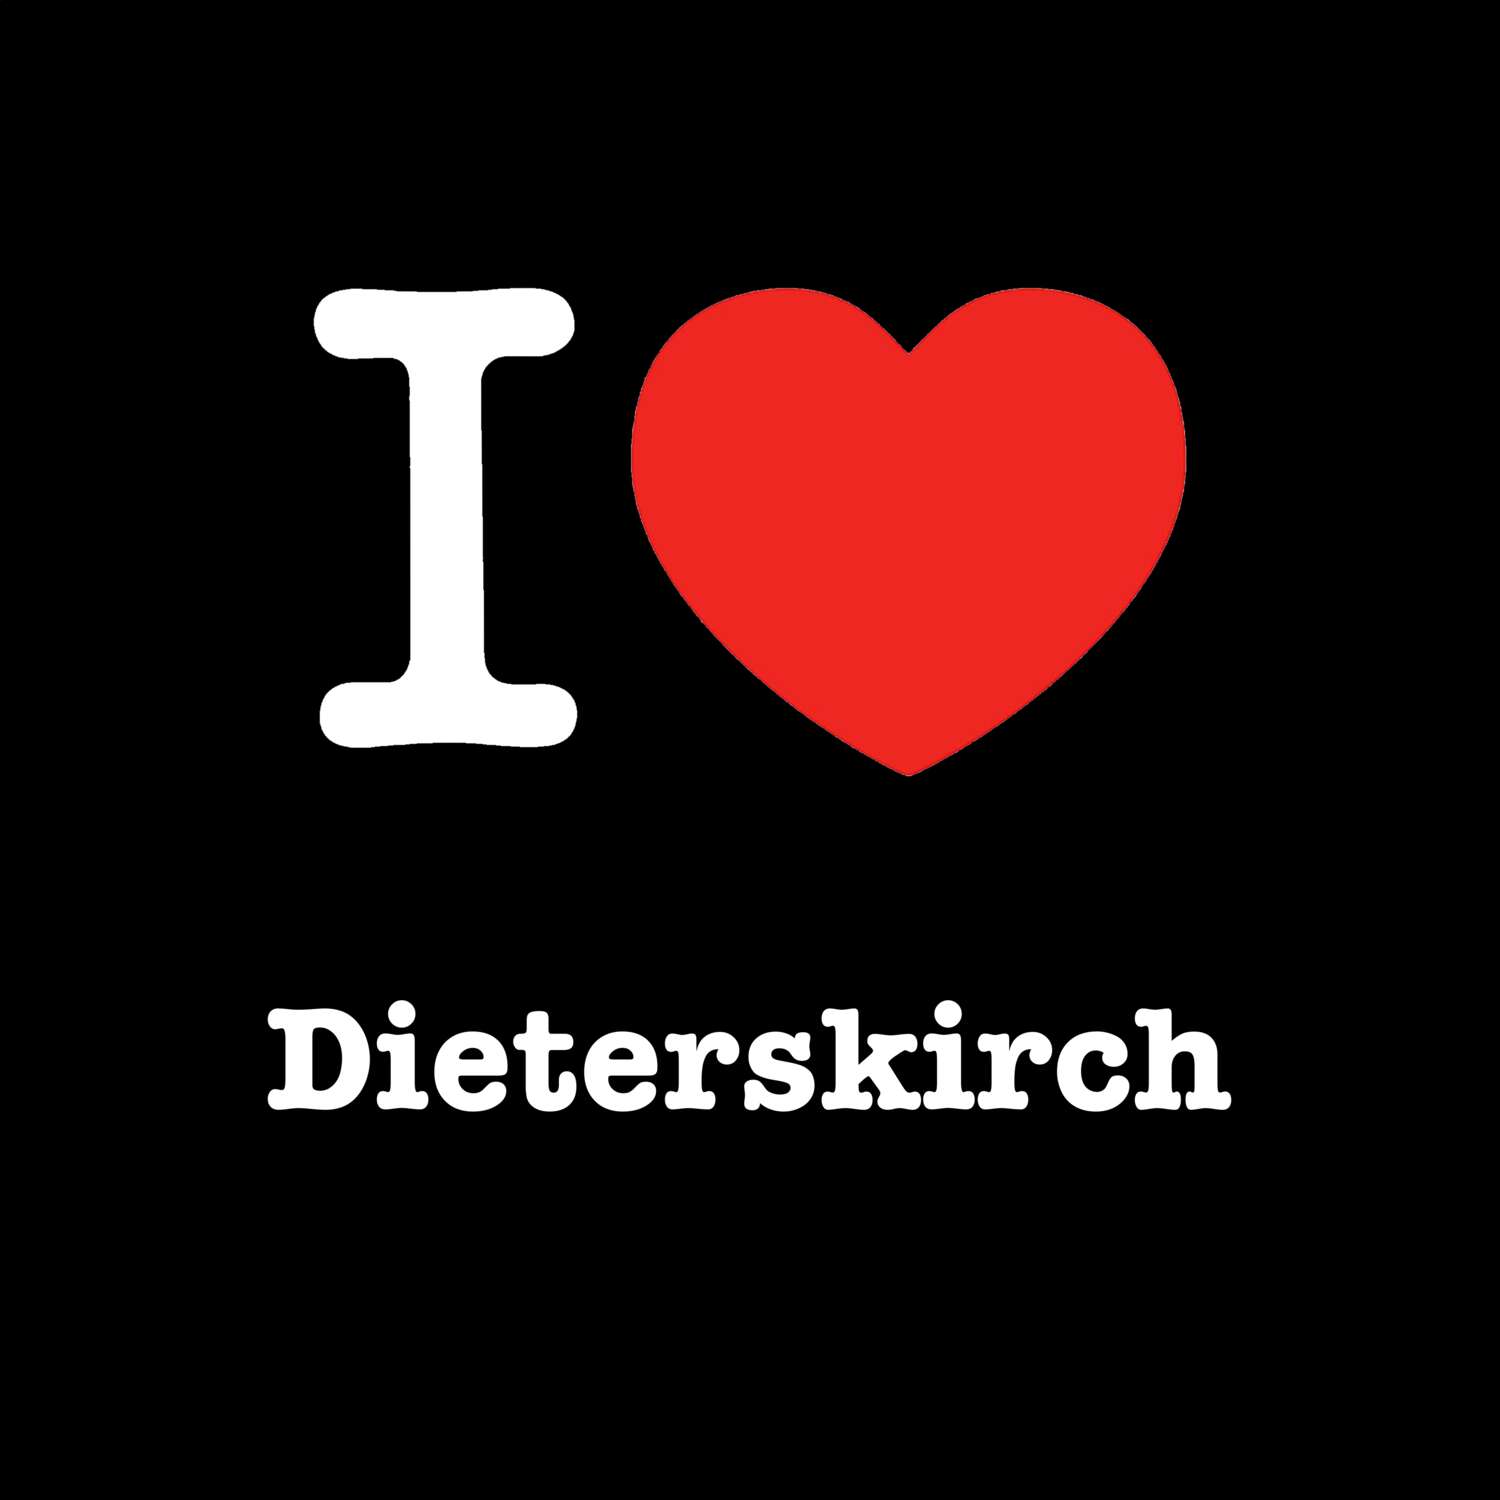 Dieterskirch T-Shirt »I love«